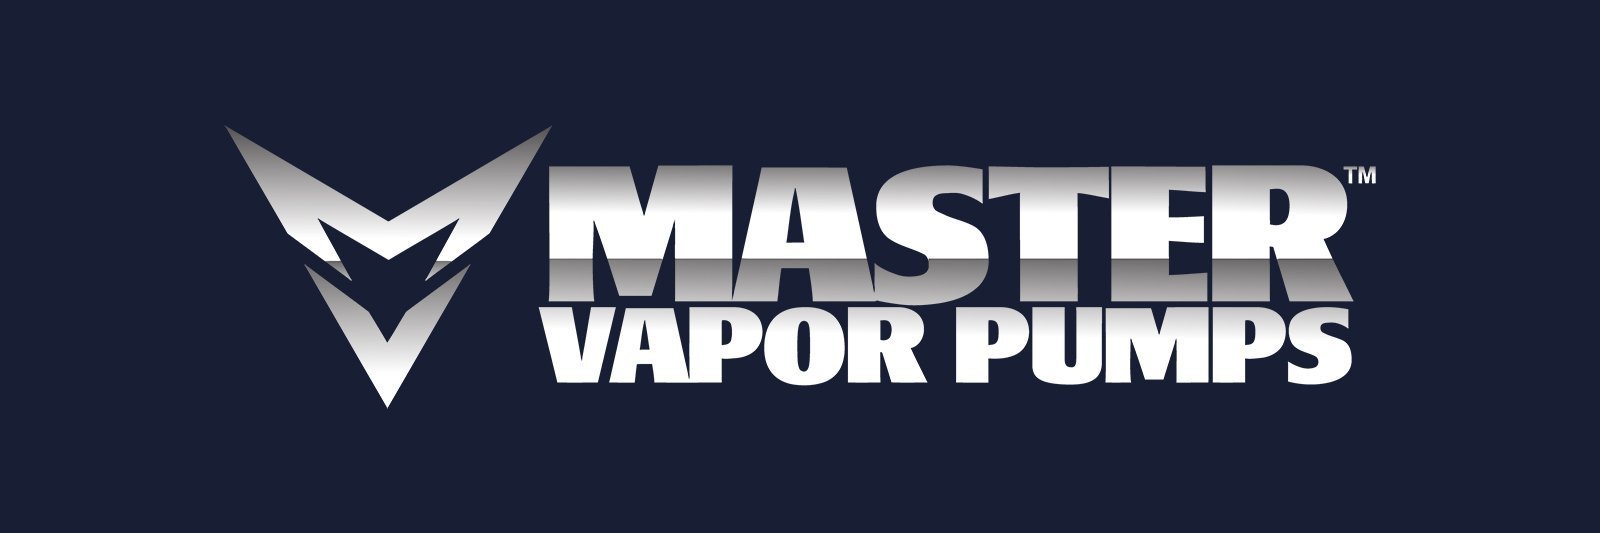 Master Vapor Pumps, Pump Part - MVP - 150 PSI & Liquid - Stand Legs